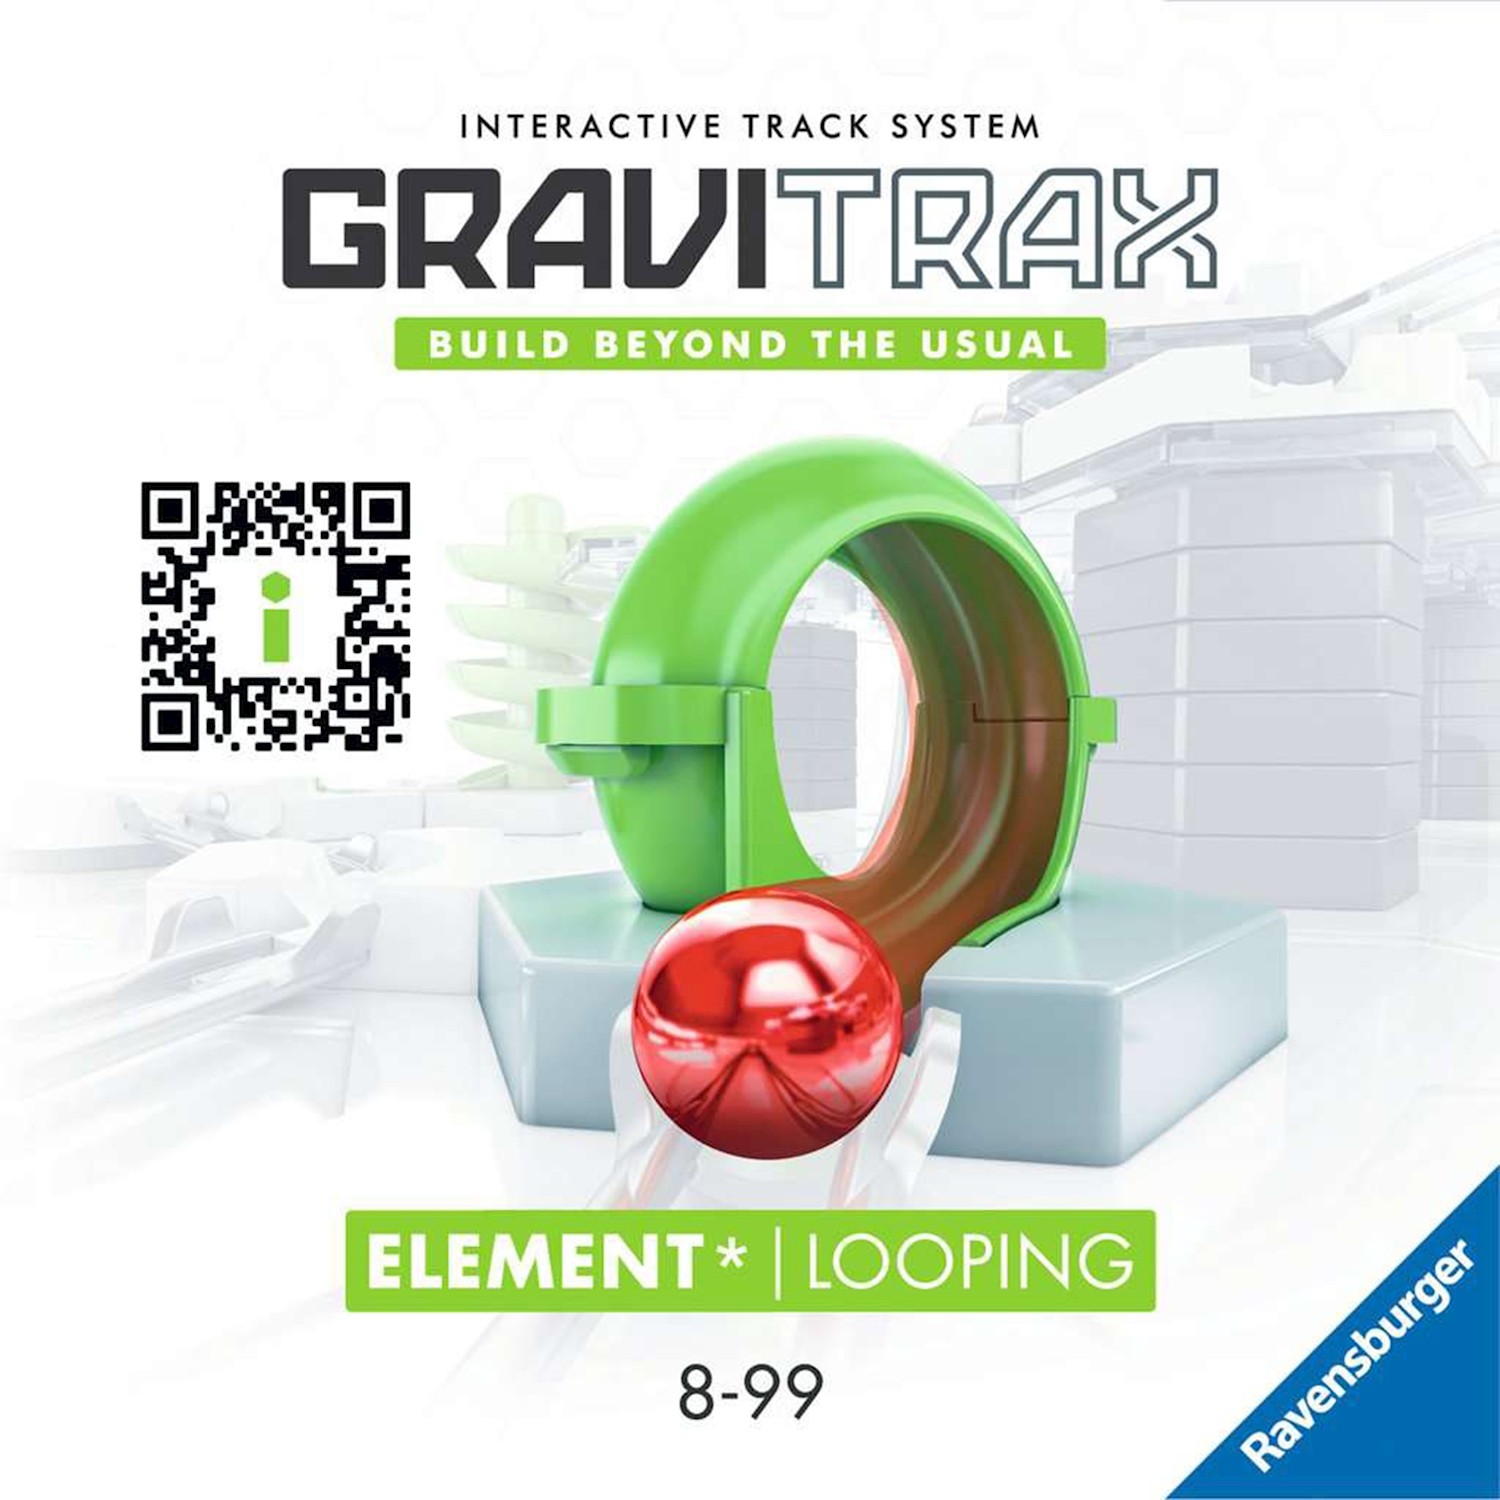 Gravitrax - Element Looping